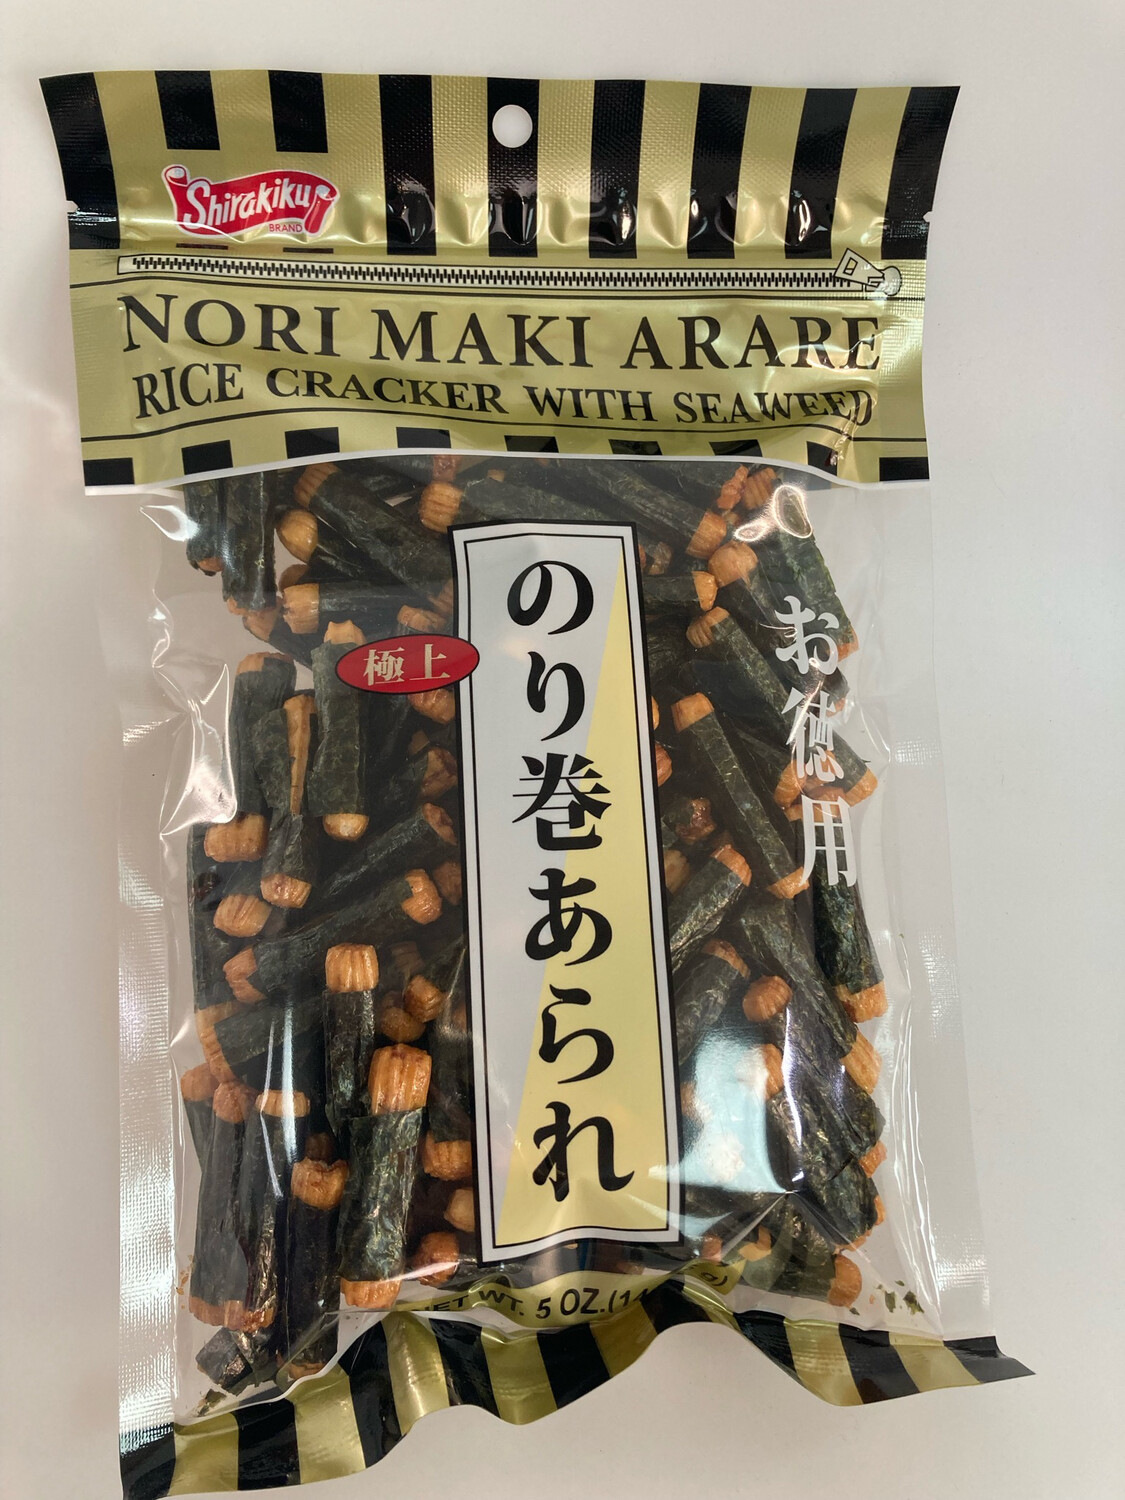 Shirakiku Rice Cracker with seaweed赞岐屋 海苔卷米饼 3oz